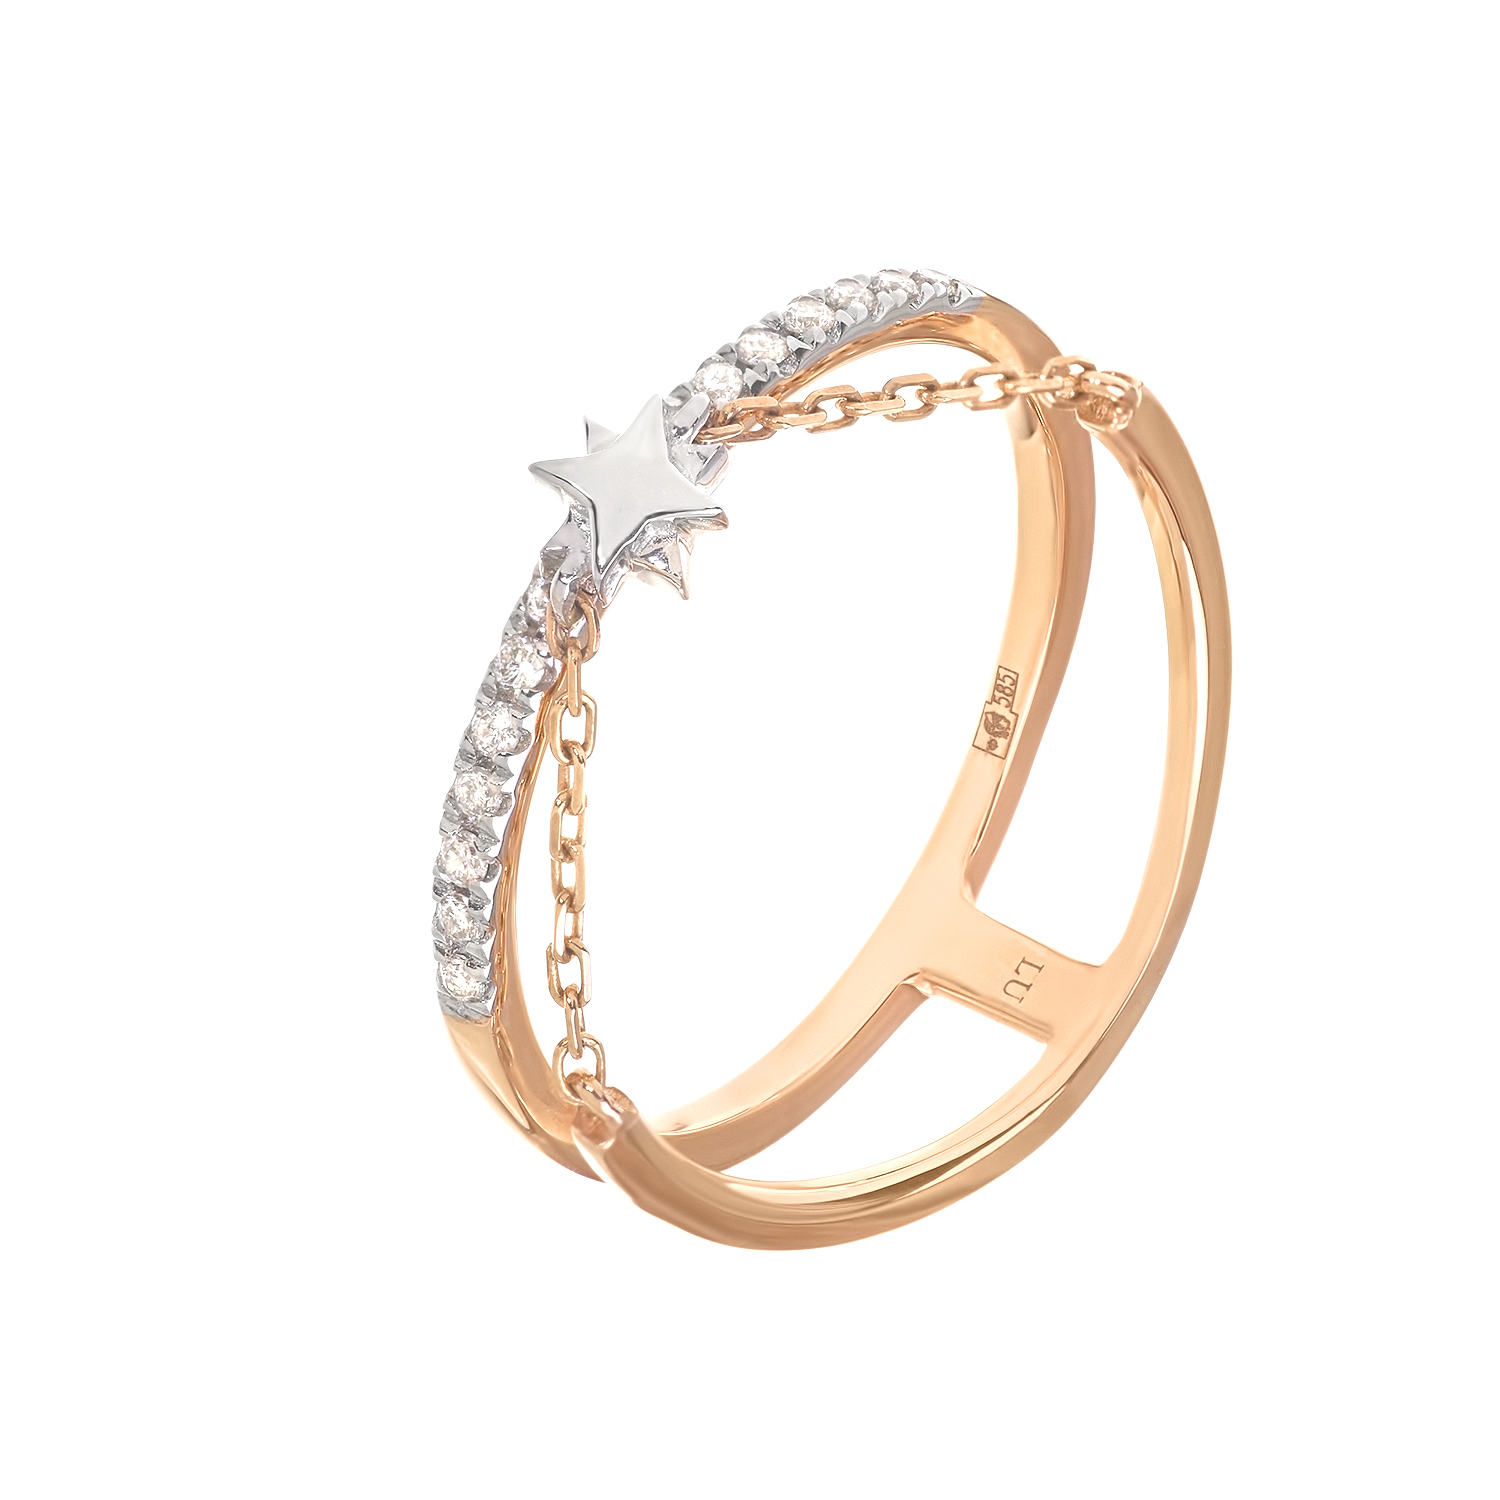 Двойное кольцо с бриллиантами в розовом золоте от магазина LunaLu